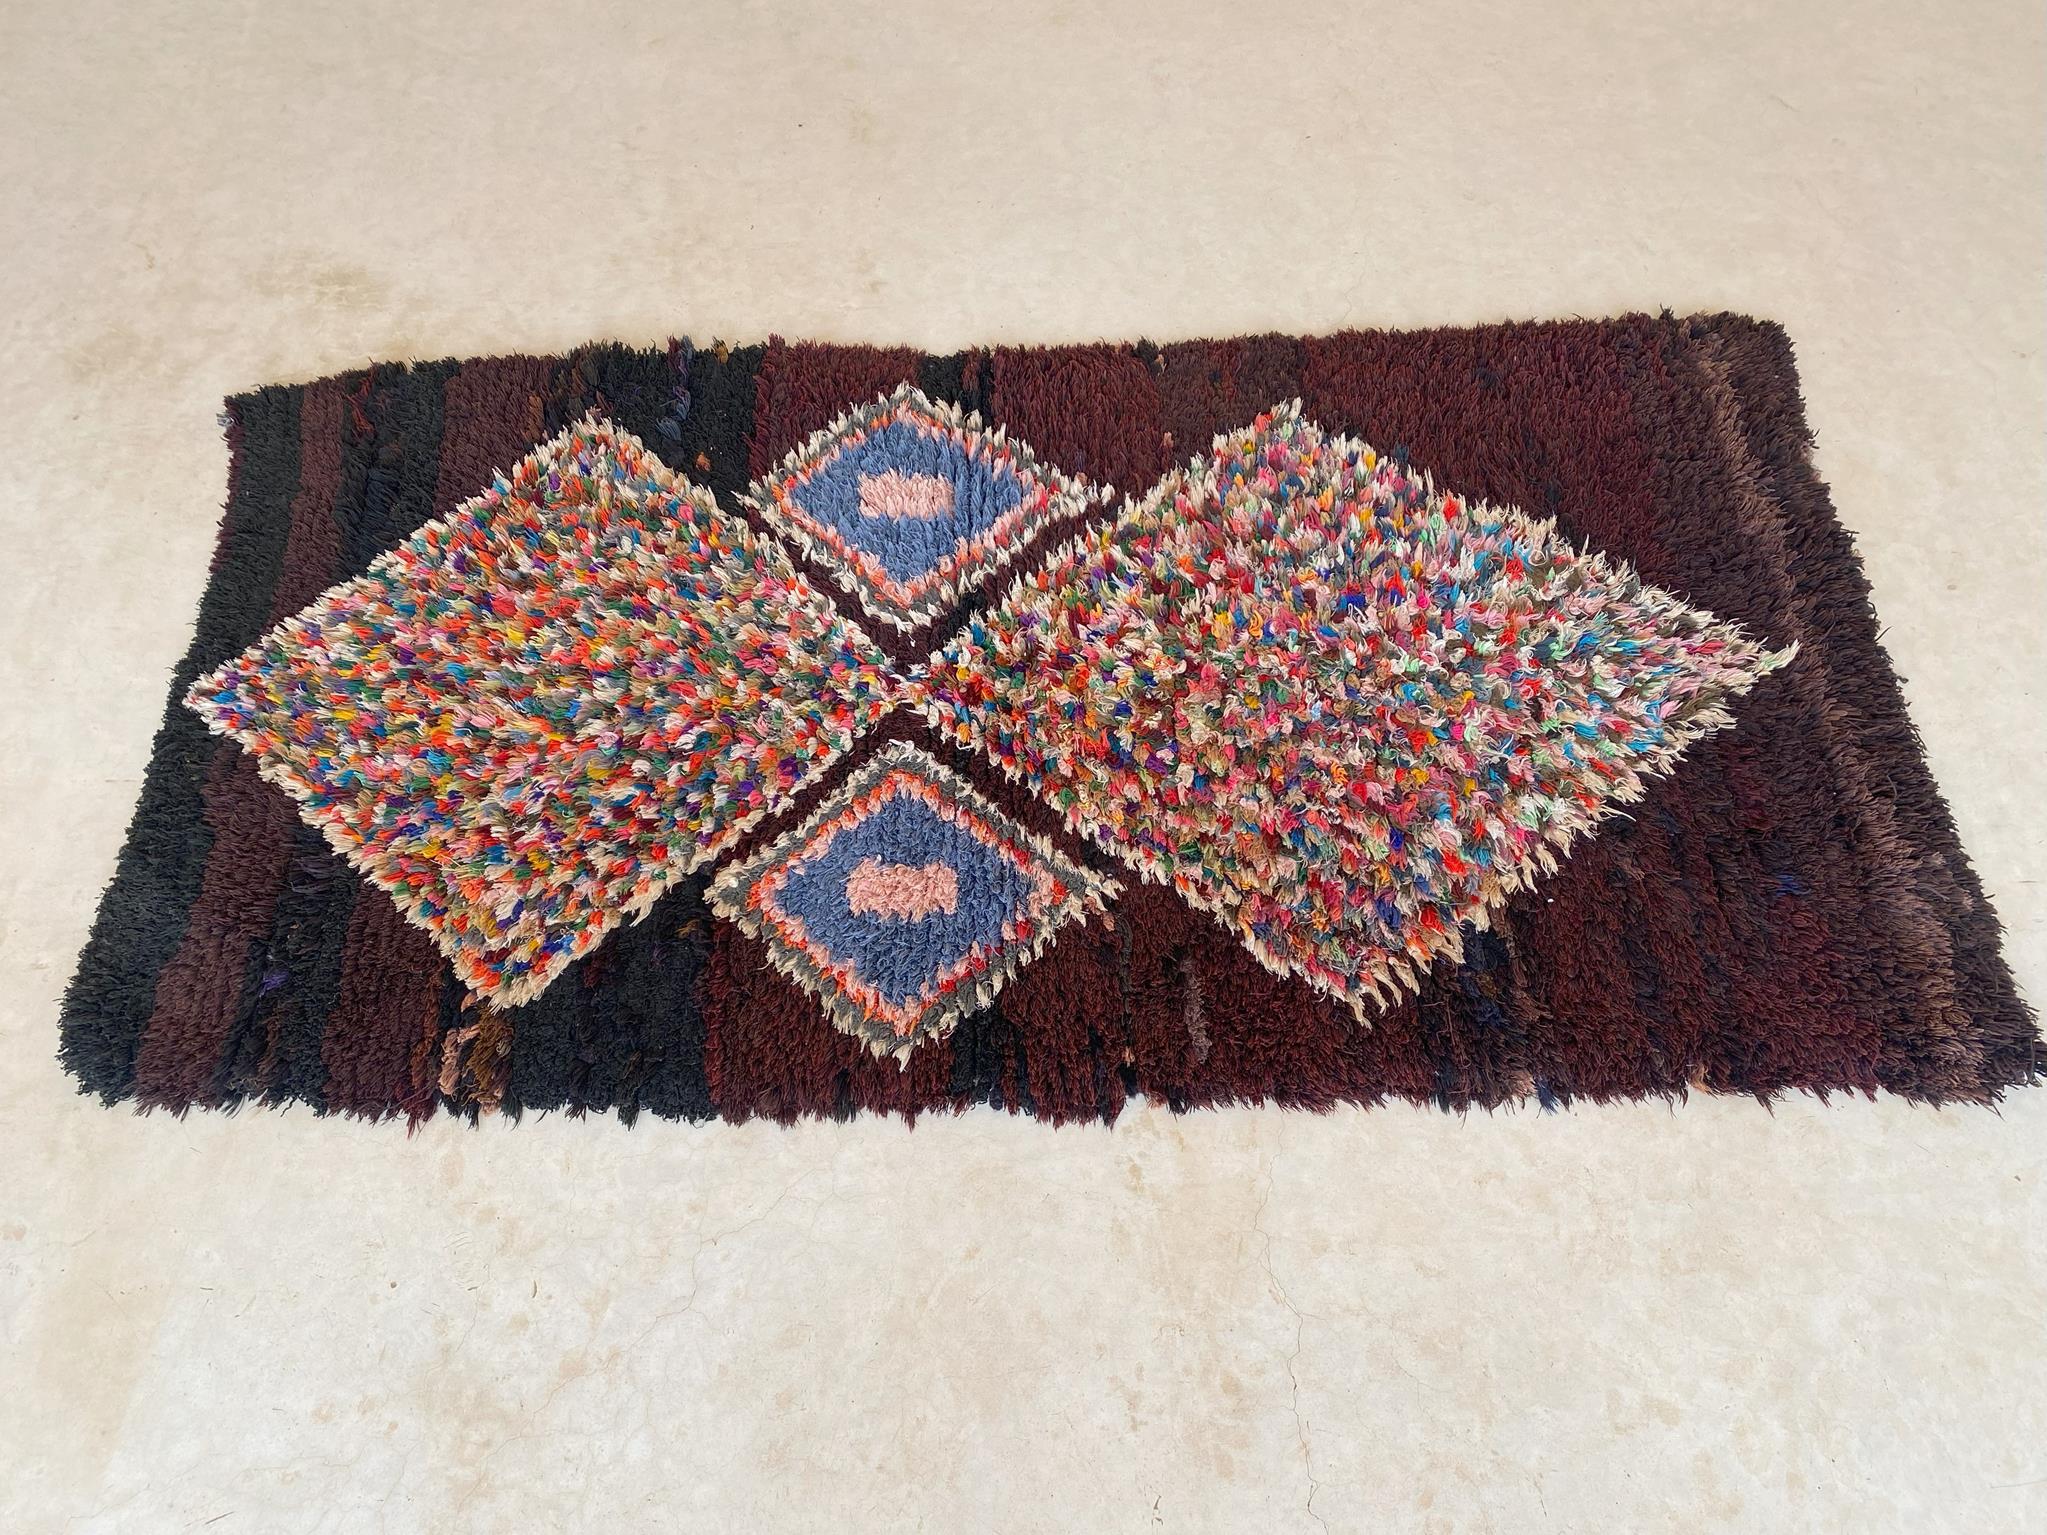 Hand-Woven Vintage Moroccan Boucherouite rug - Brown/multicolor - 3.1x5.9feet / 96x180cm For Sale